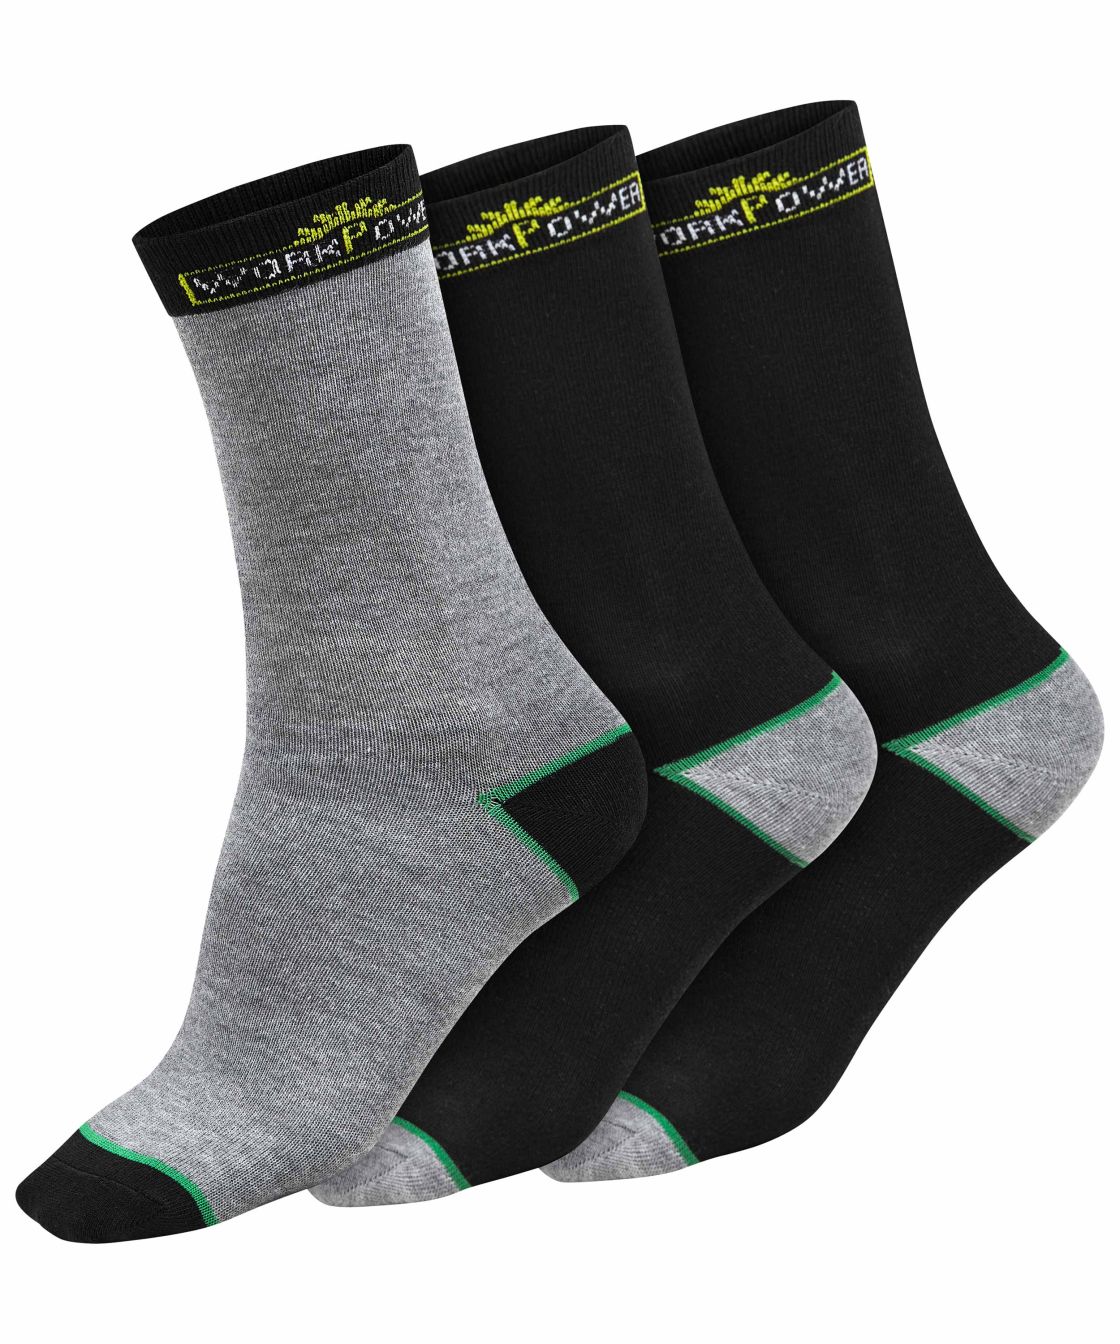 Workpower Recycling Socken, 3er Pack, 1x grau, 2x schwarz schwarz/grau